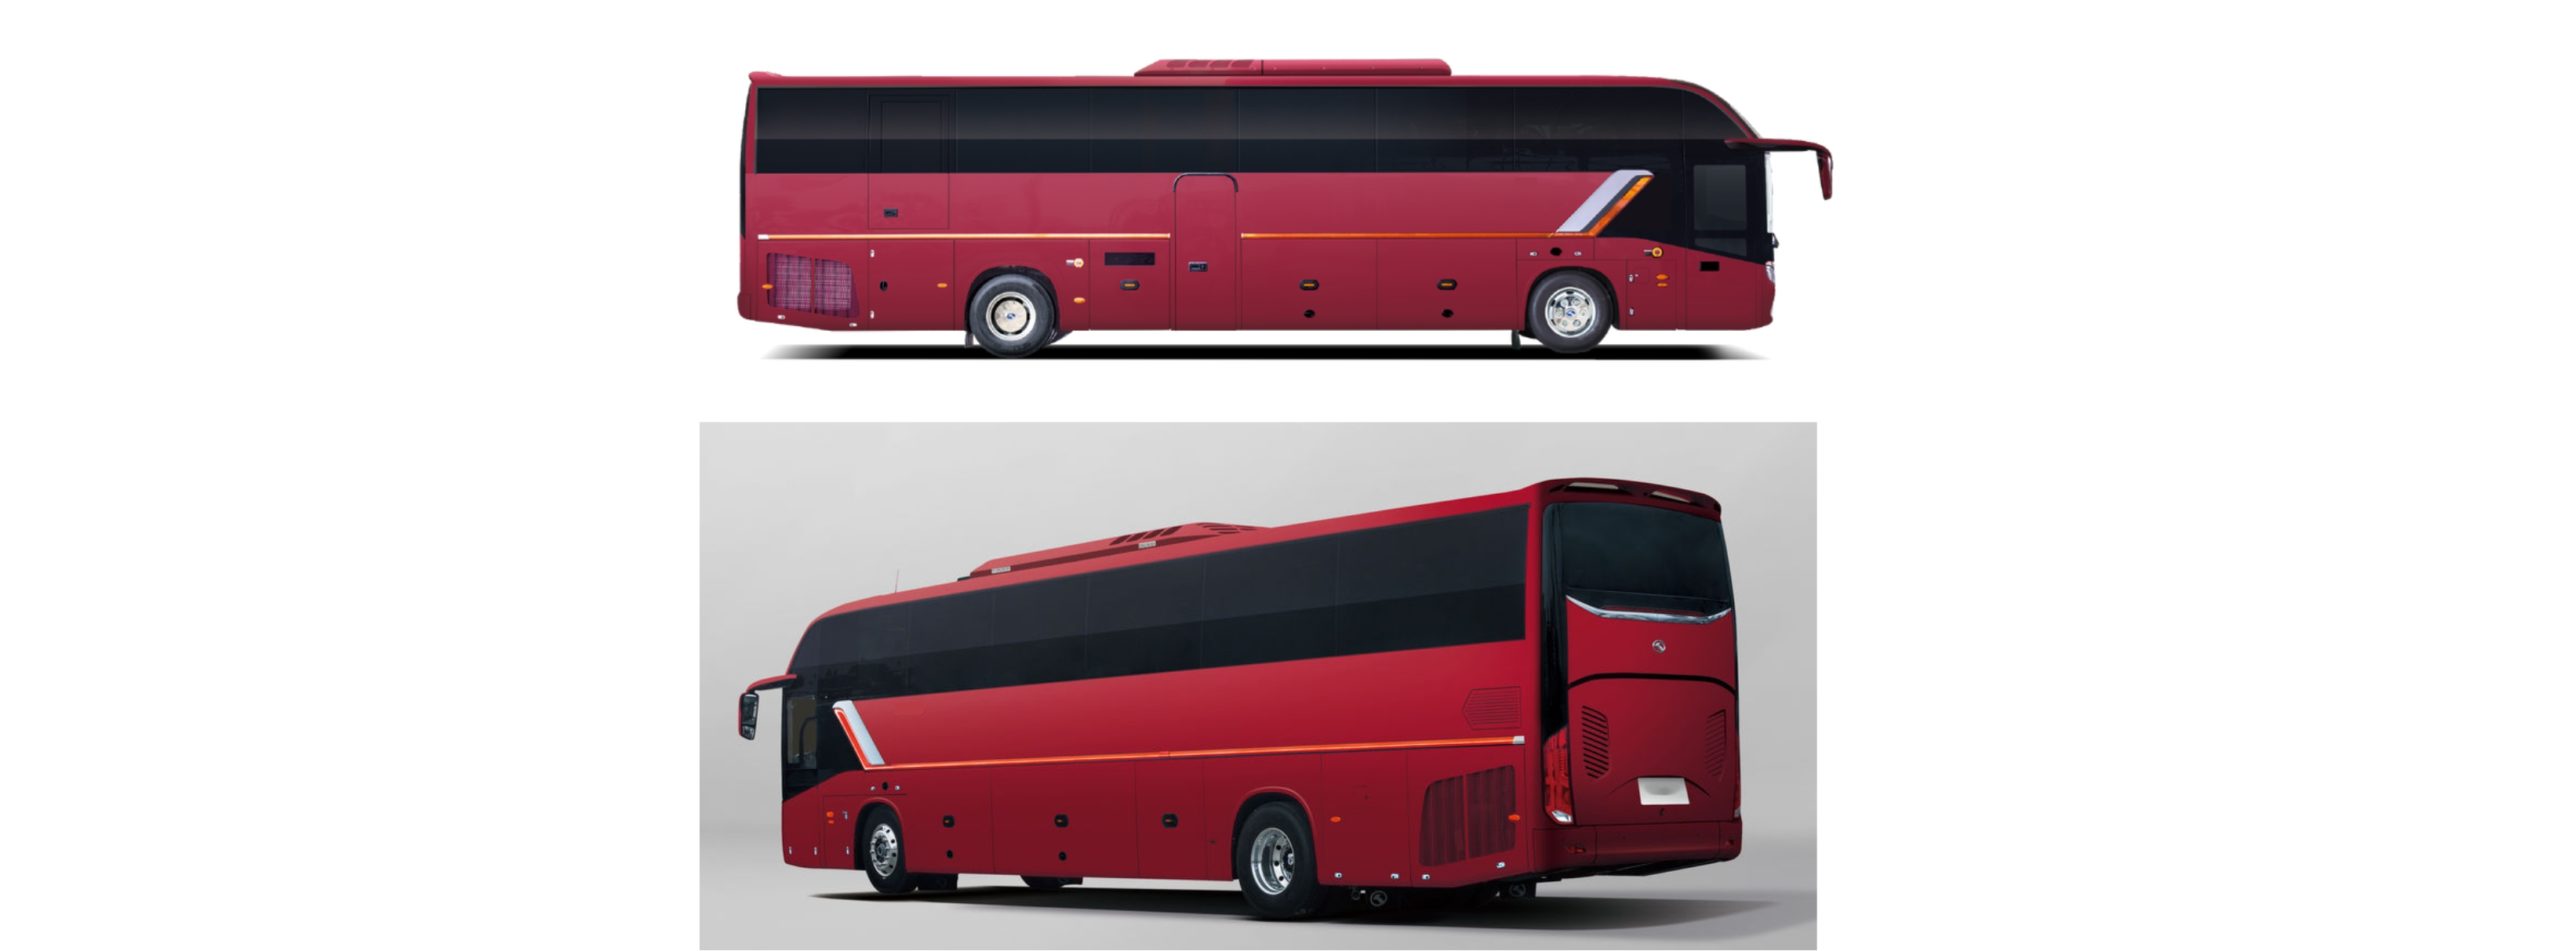 lateral autocar-13m-king-long_c13hd y autocar-12m-king-long_c12hd